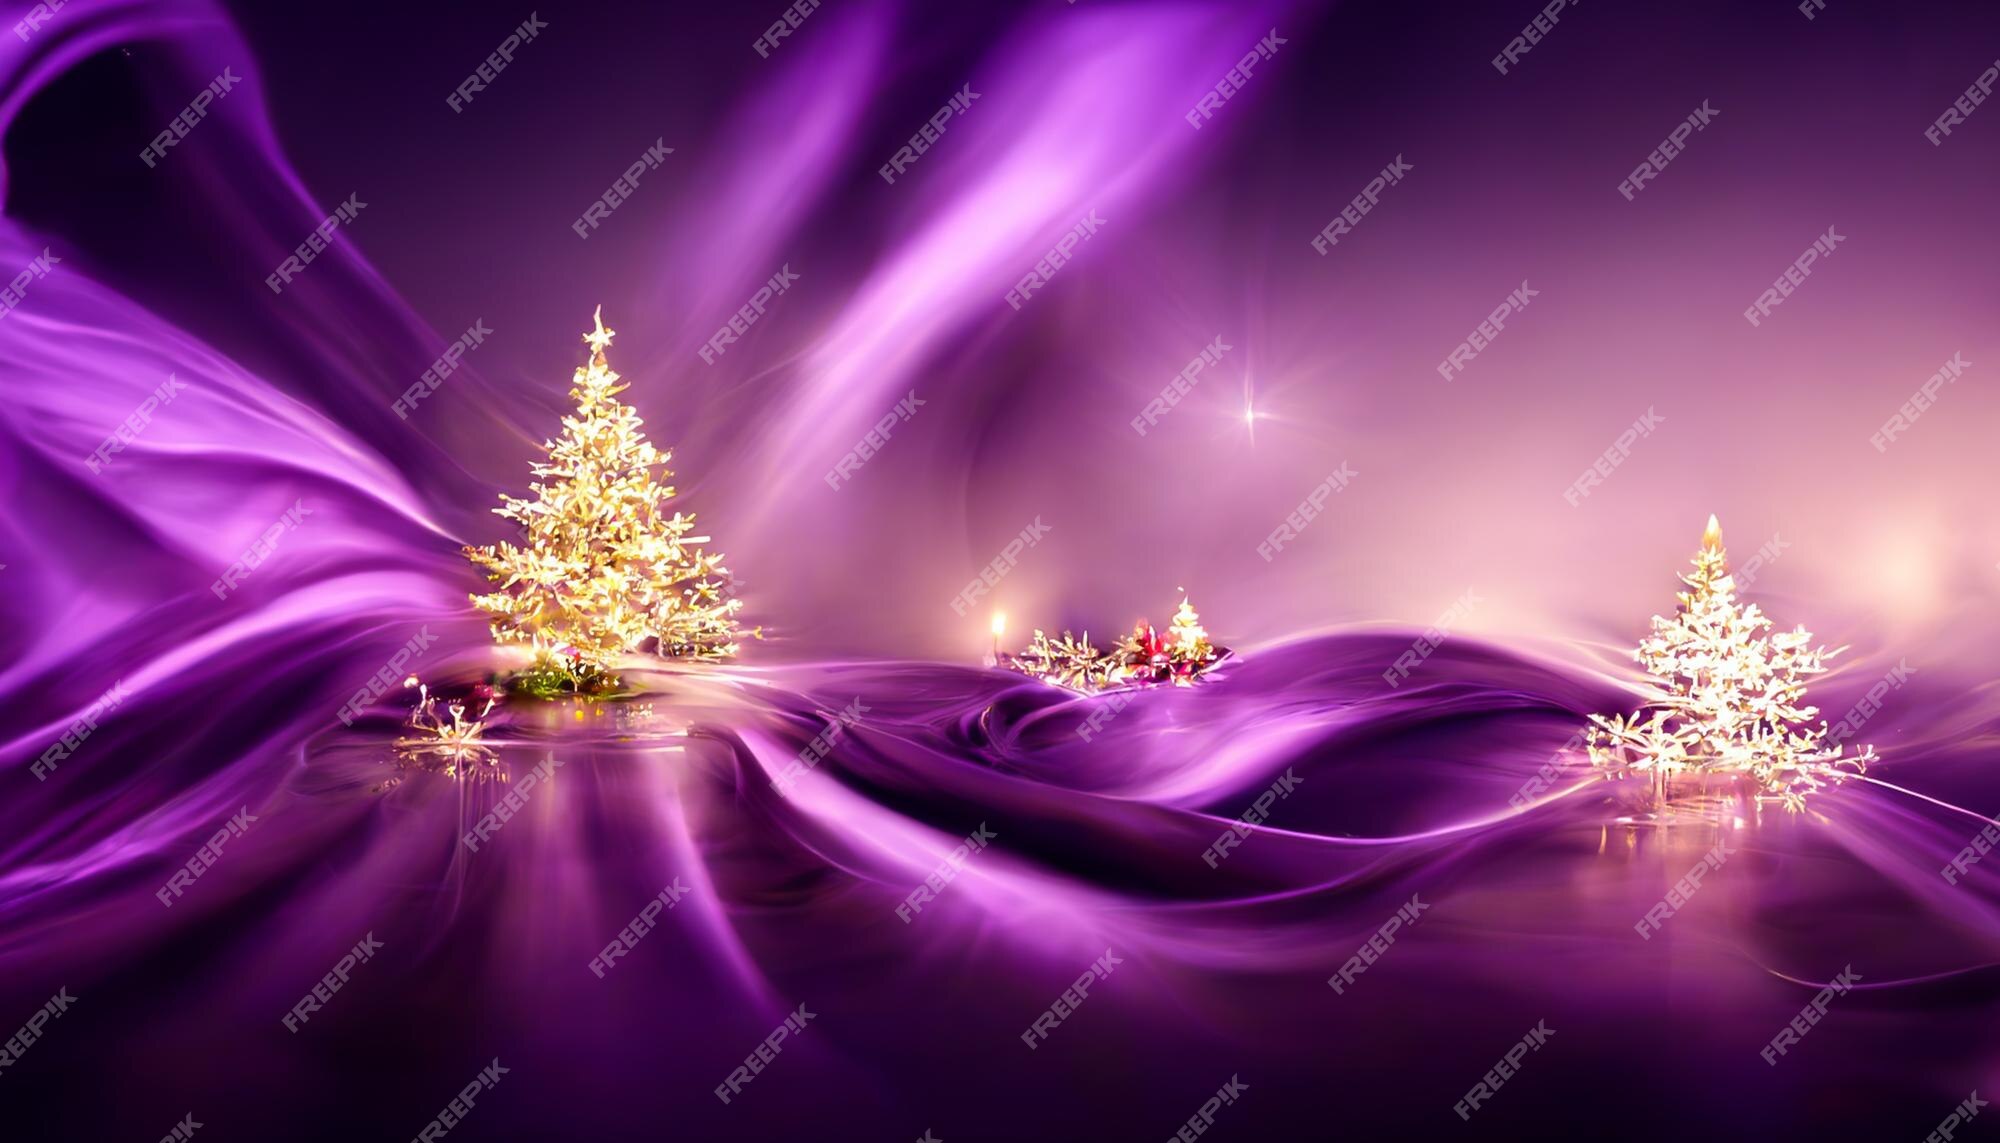 Premium Photo | Merry christmas hd wallpaper beautiful artwork seasonal  illustration and copy space background